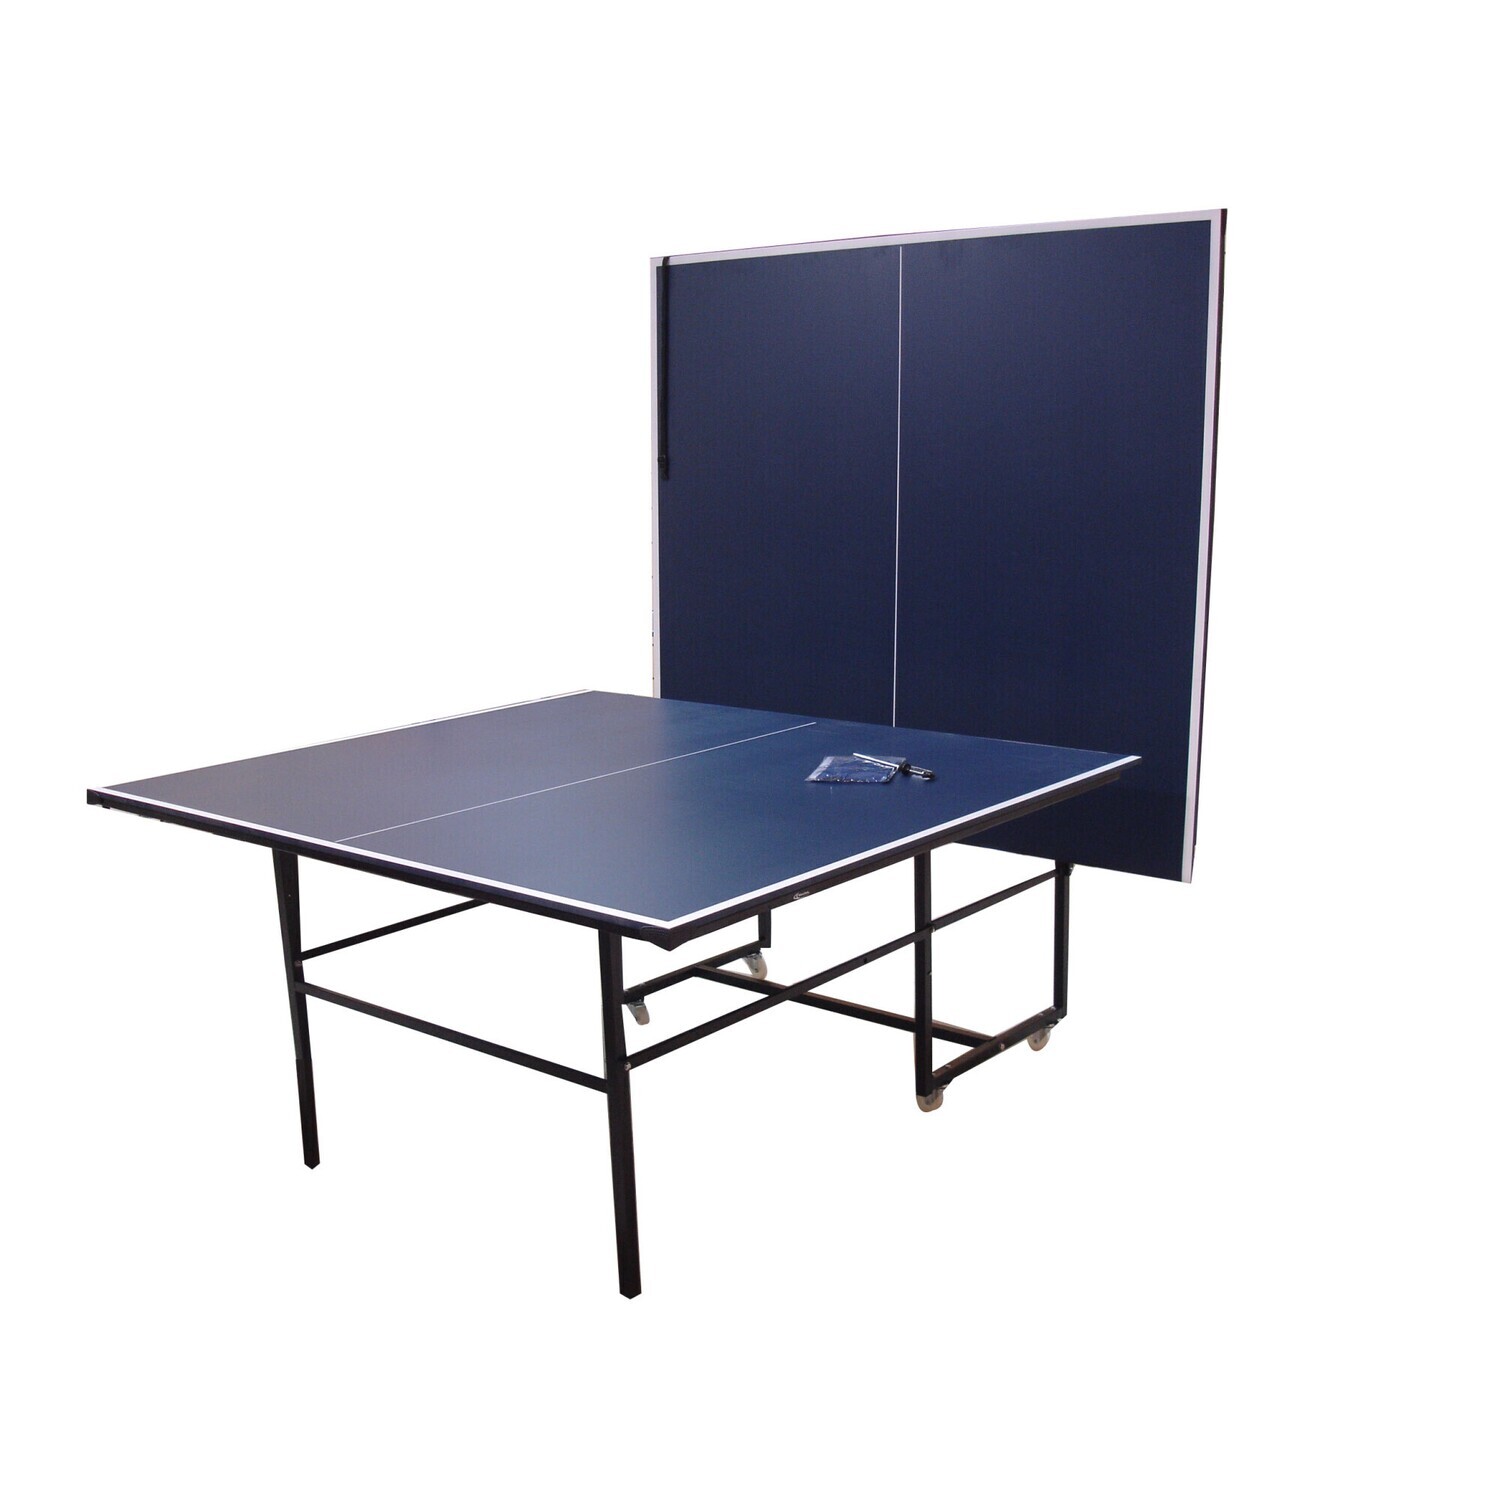 Mesa Ping Pong Exterior Interior Plegable C/ruedas N1 El Rey